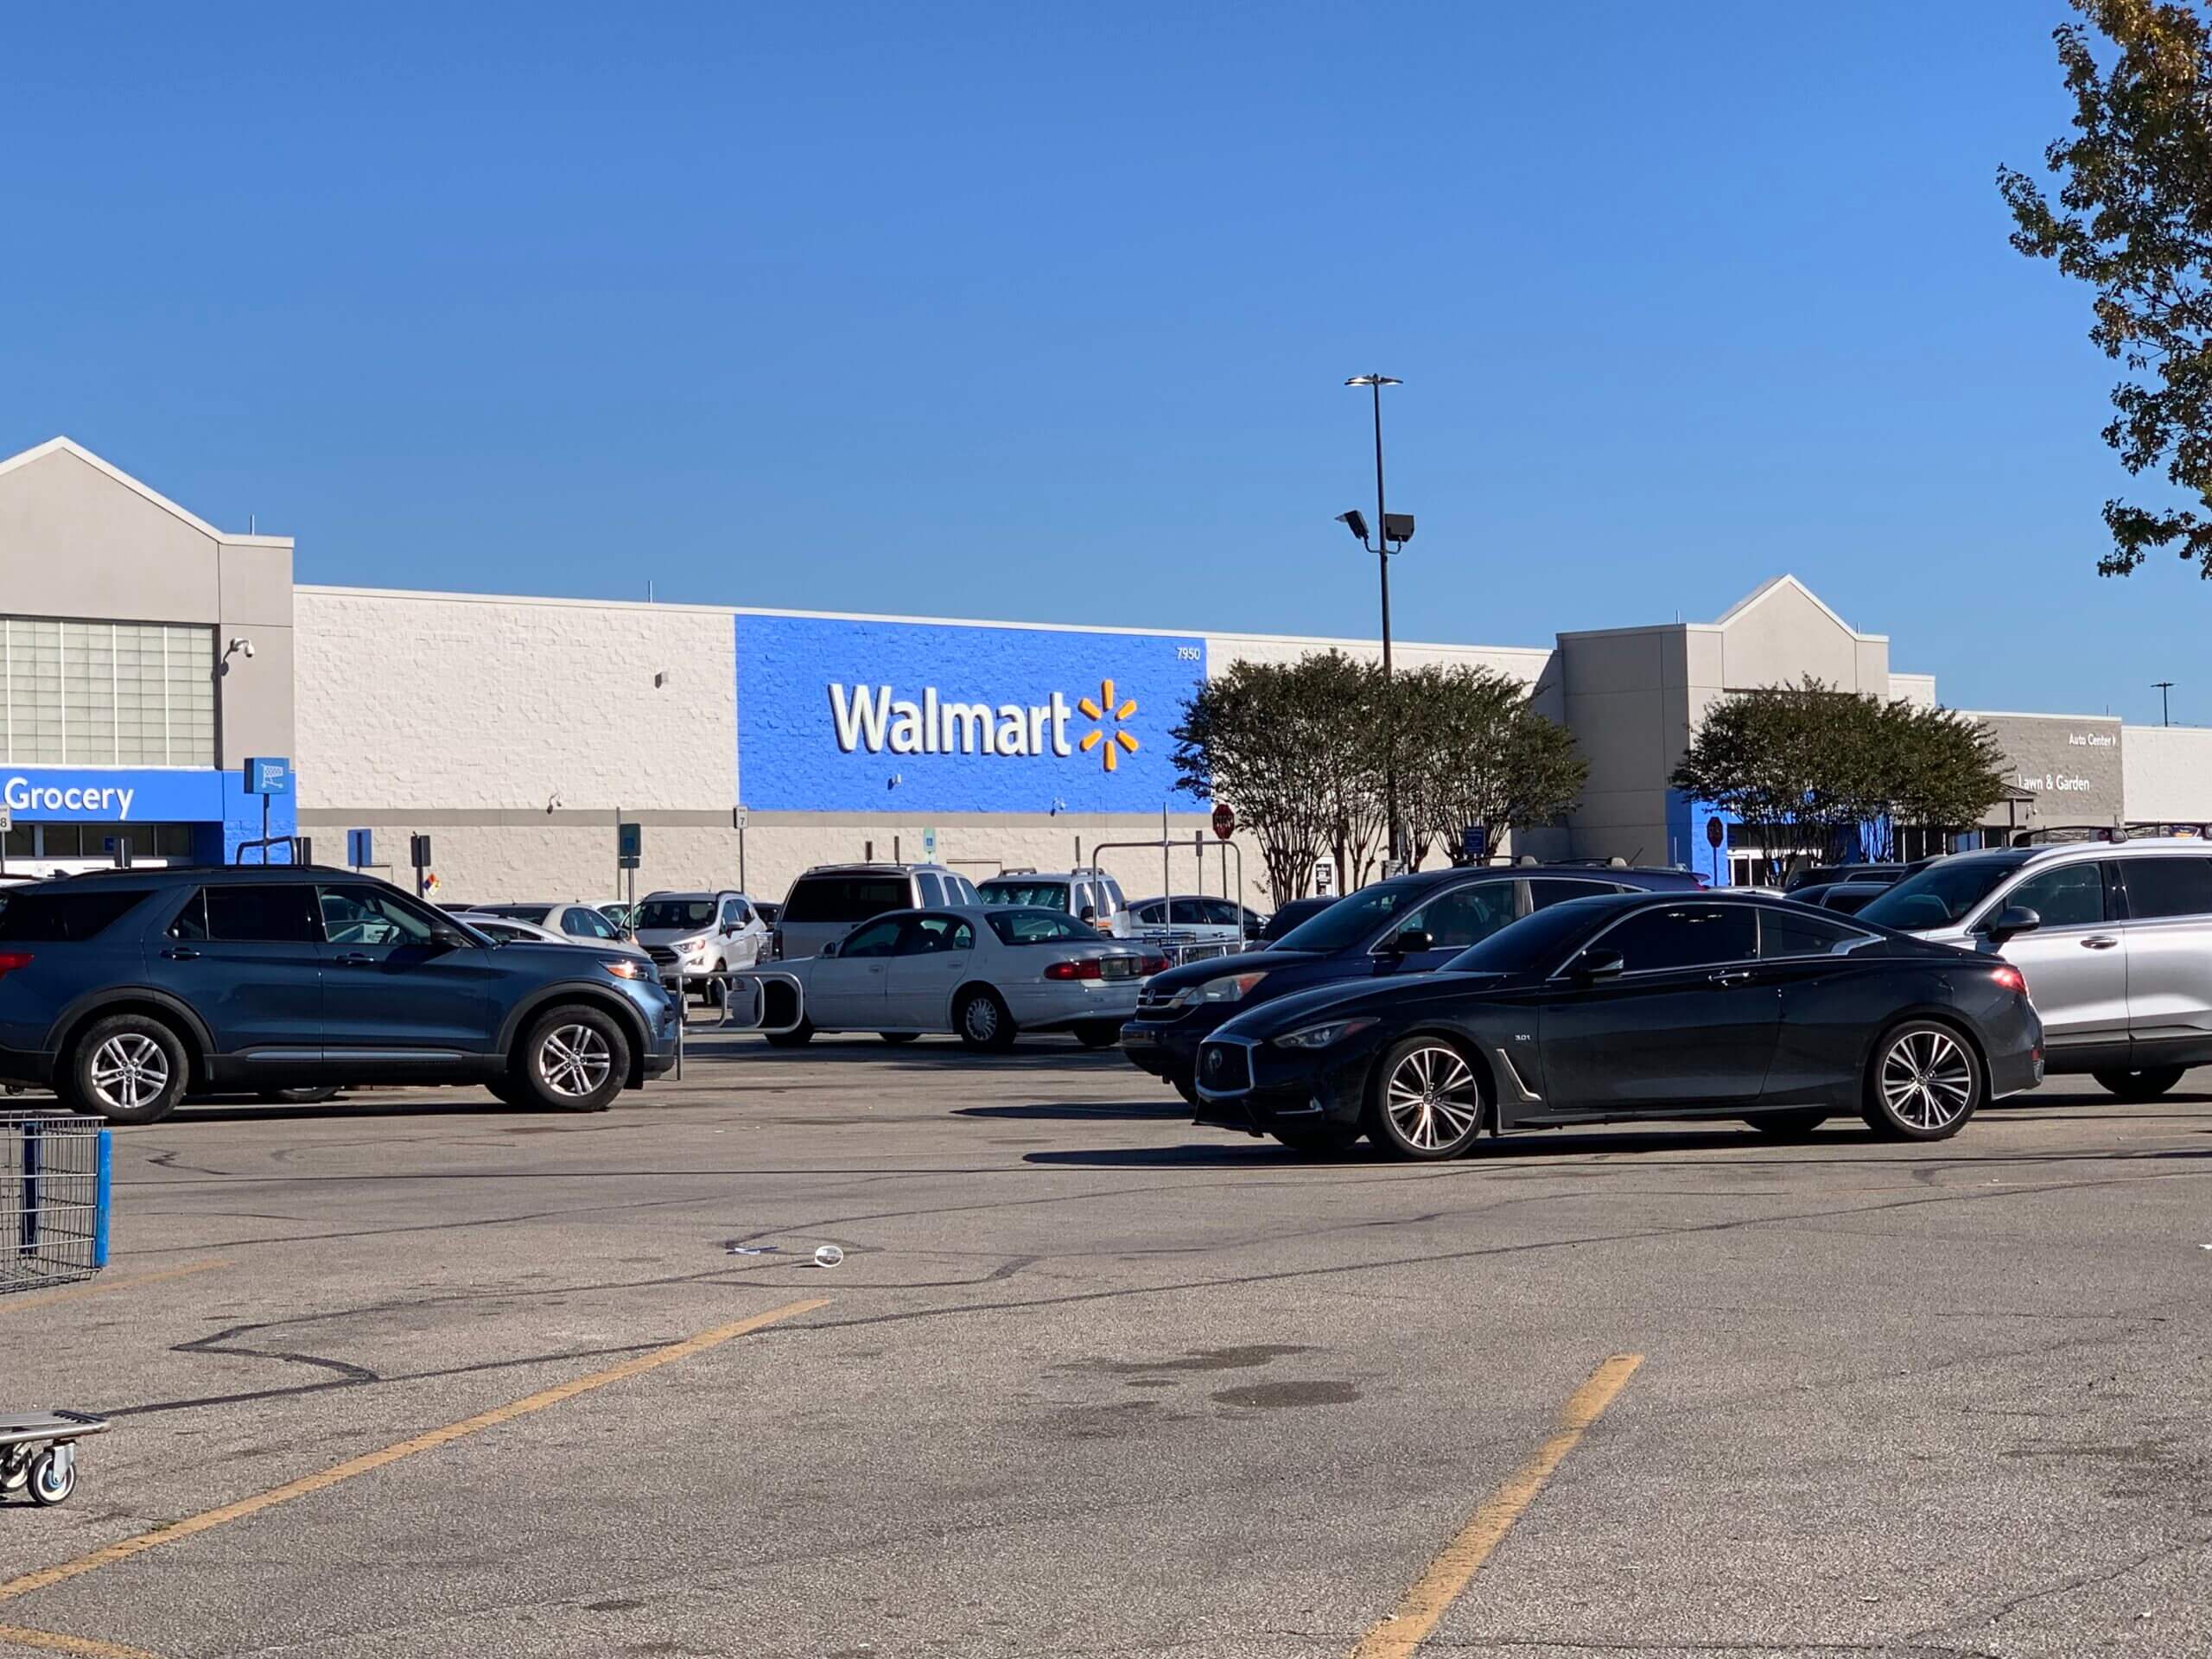 Investigation into Walmart incident continues